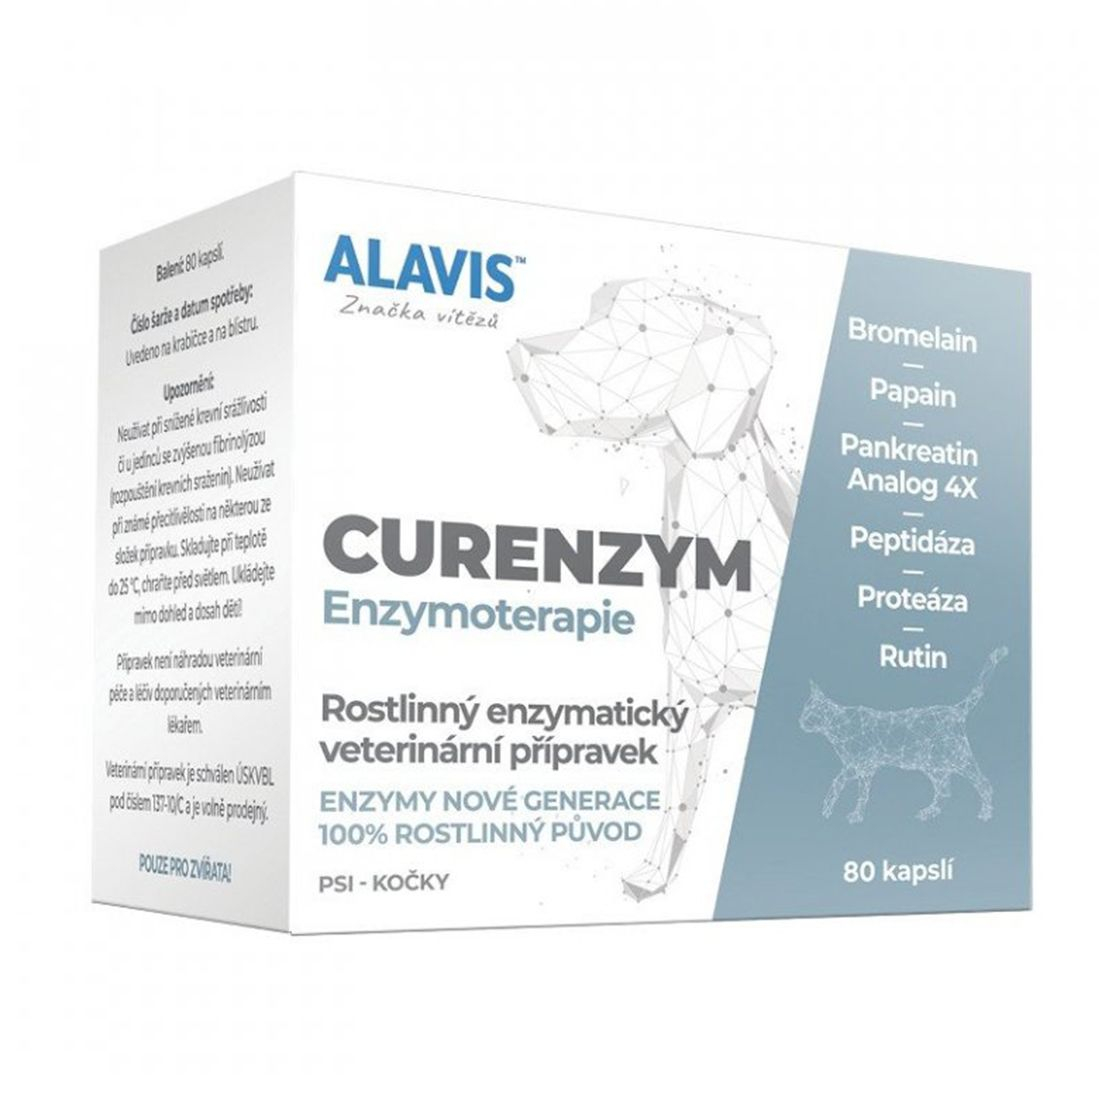 ALAVIS CURENZYM Enzymoterapia 80 tabliet